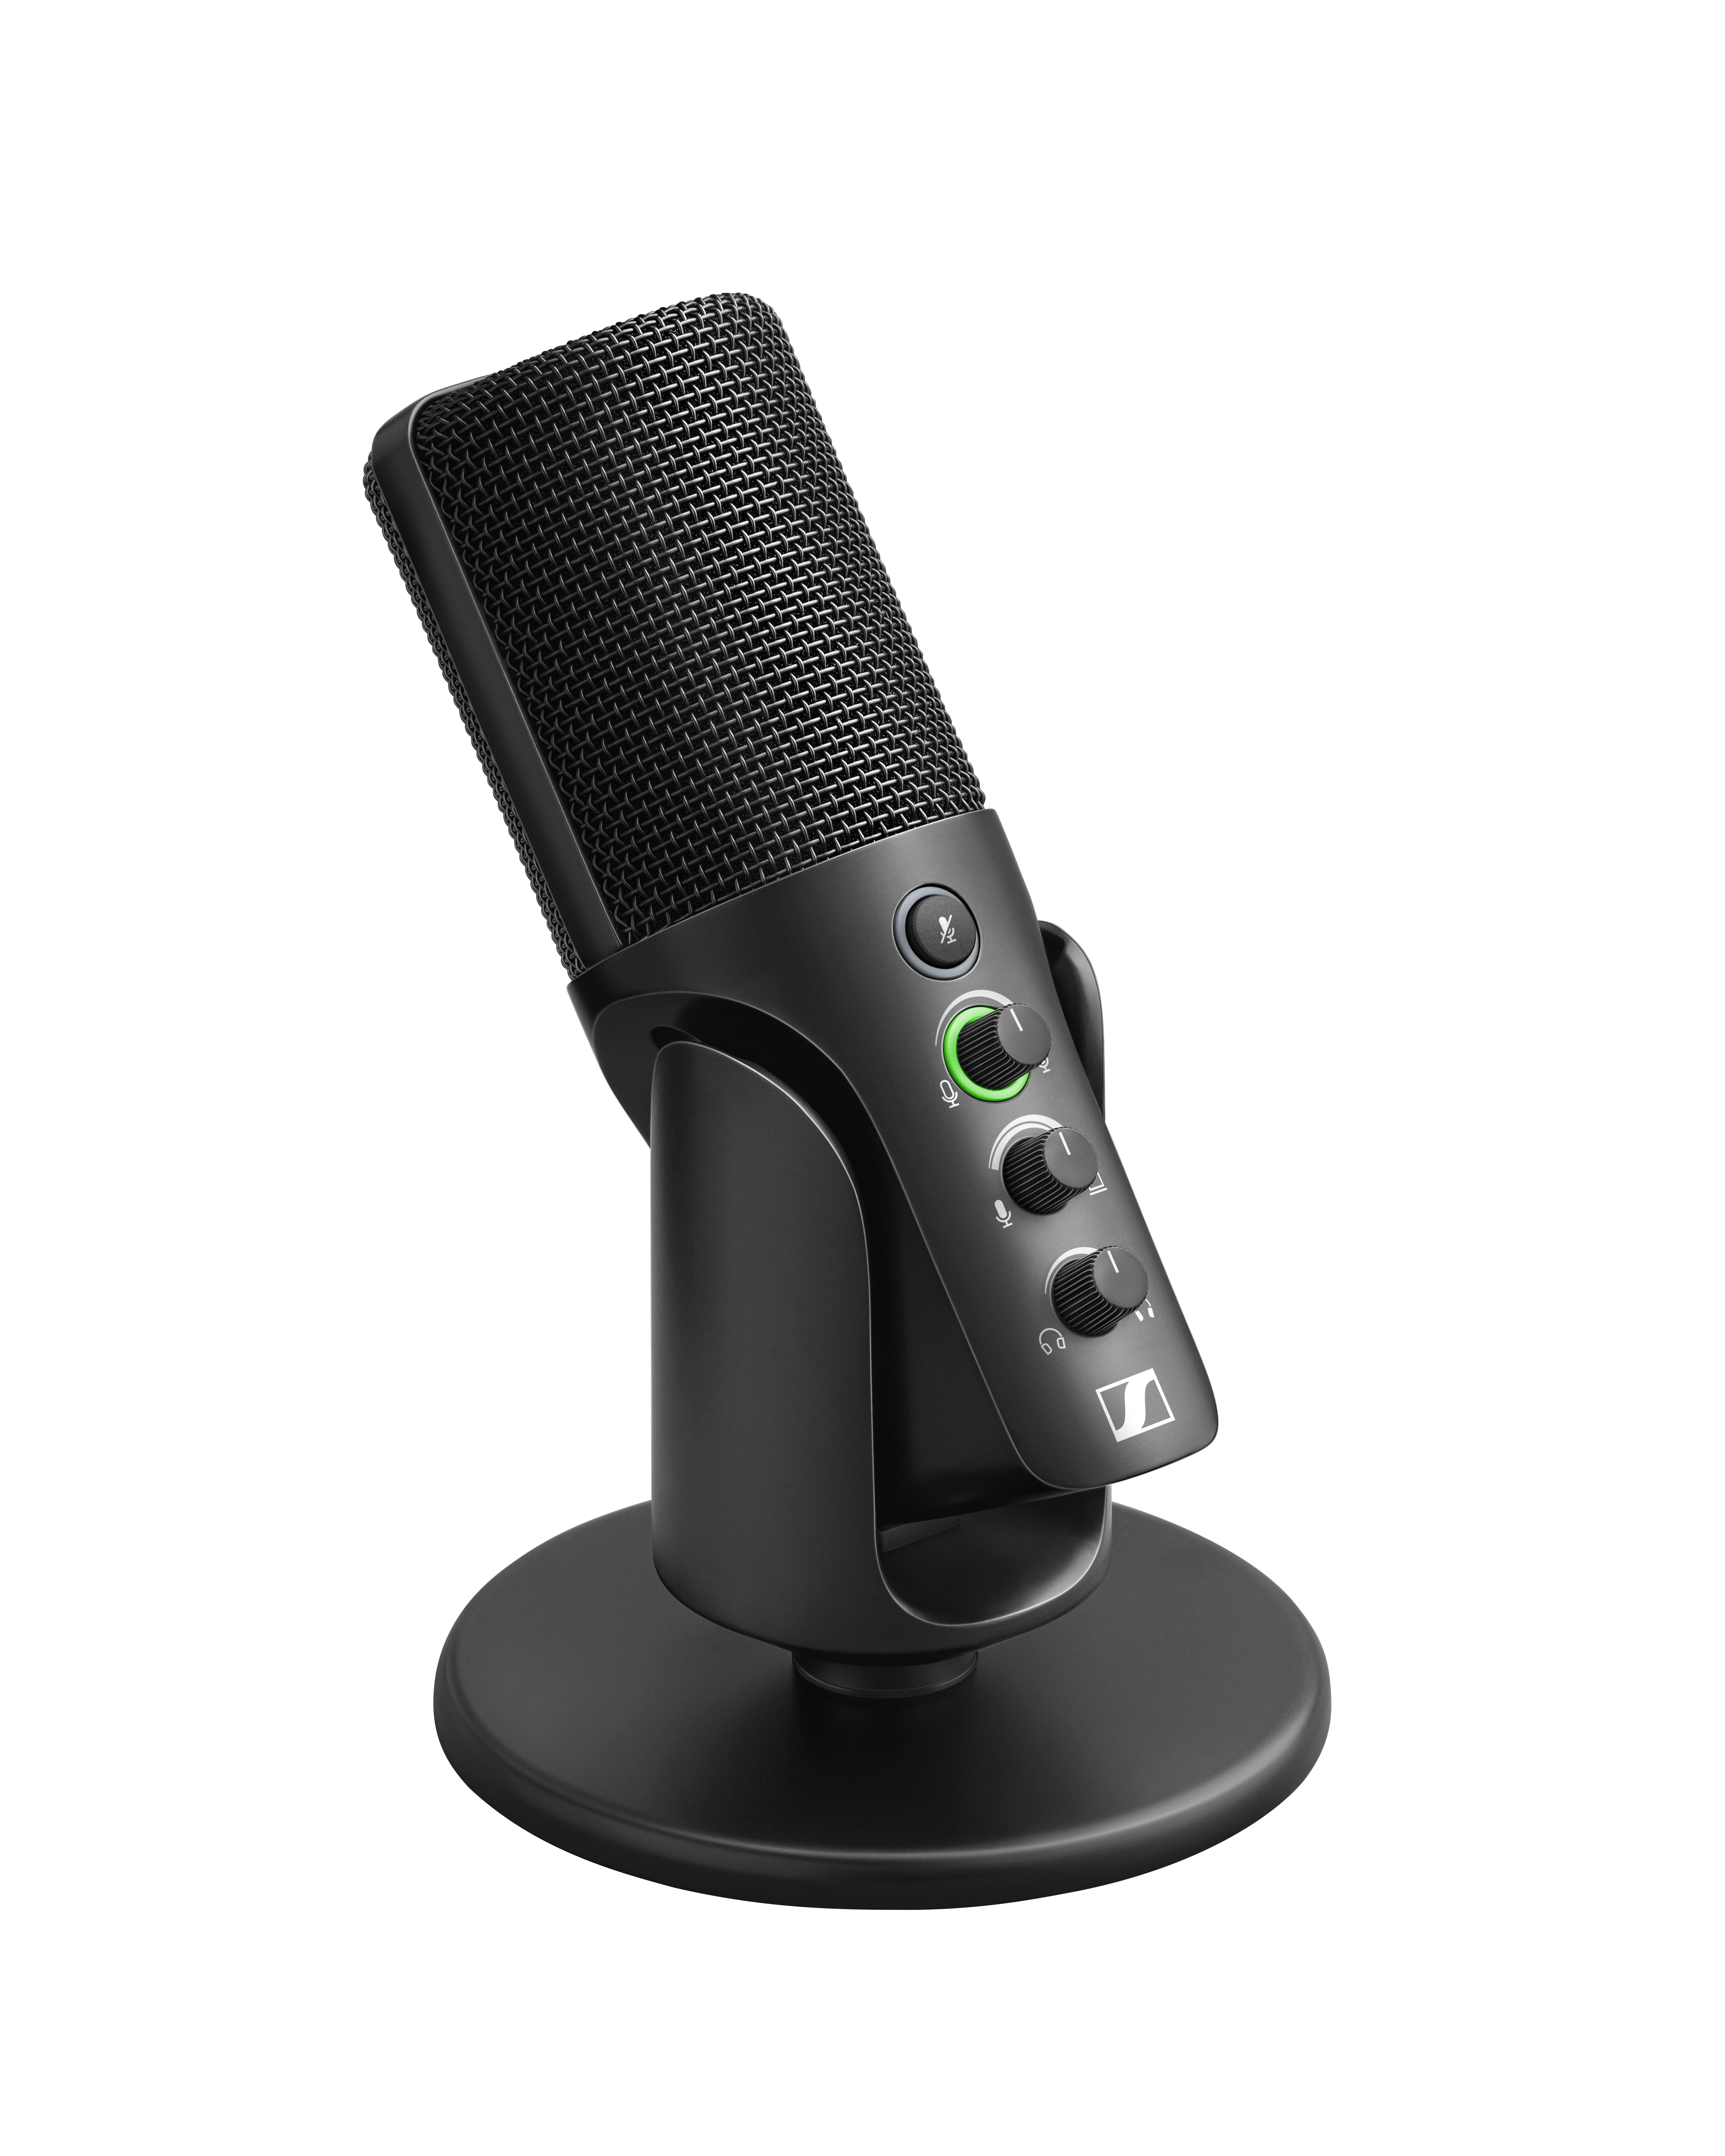 Kombinasi kesederhanaan plug-and-play dan sound Sennheiser terbaik: Mikrofon Profile USB